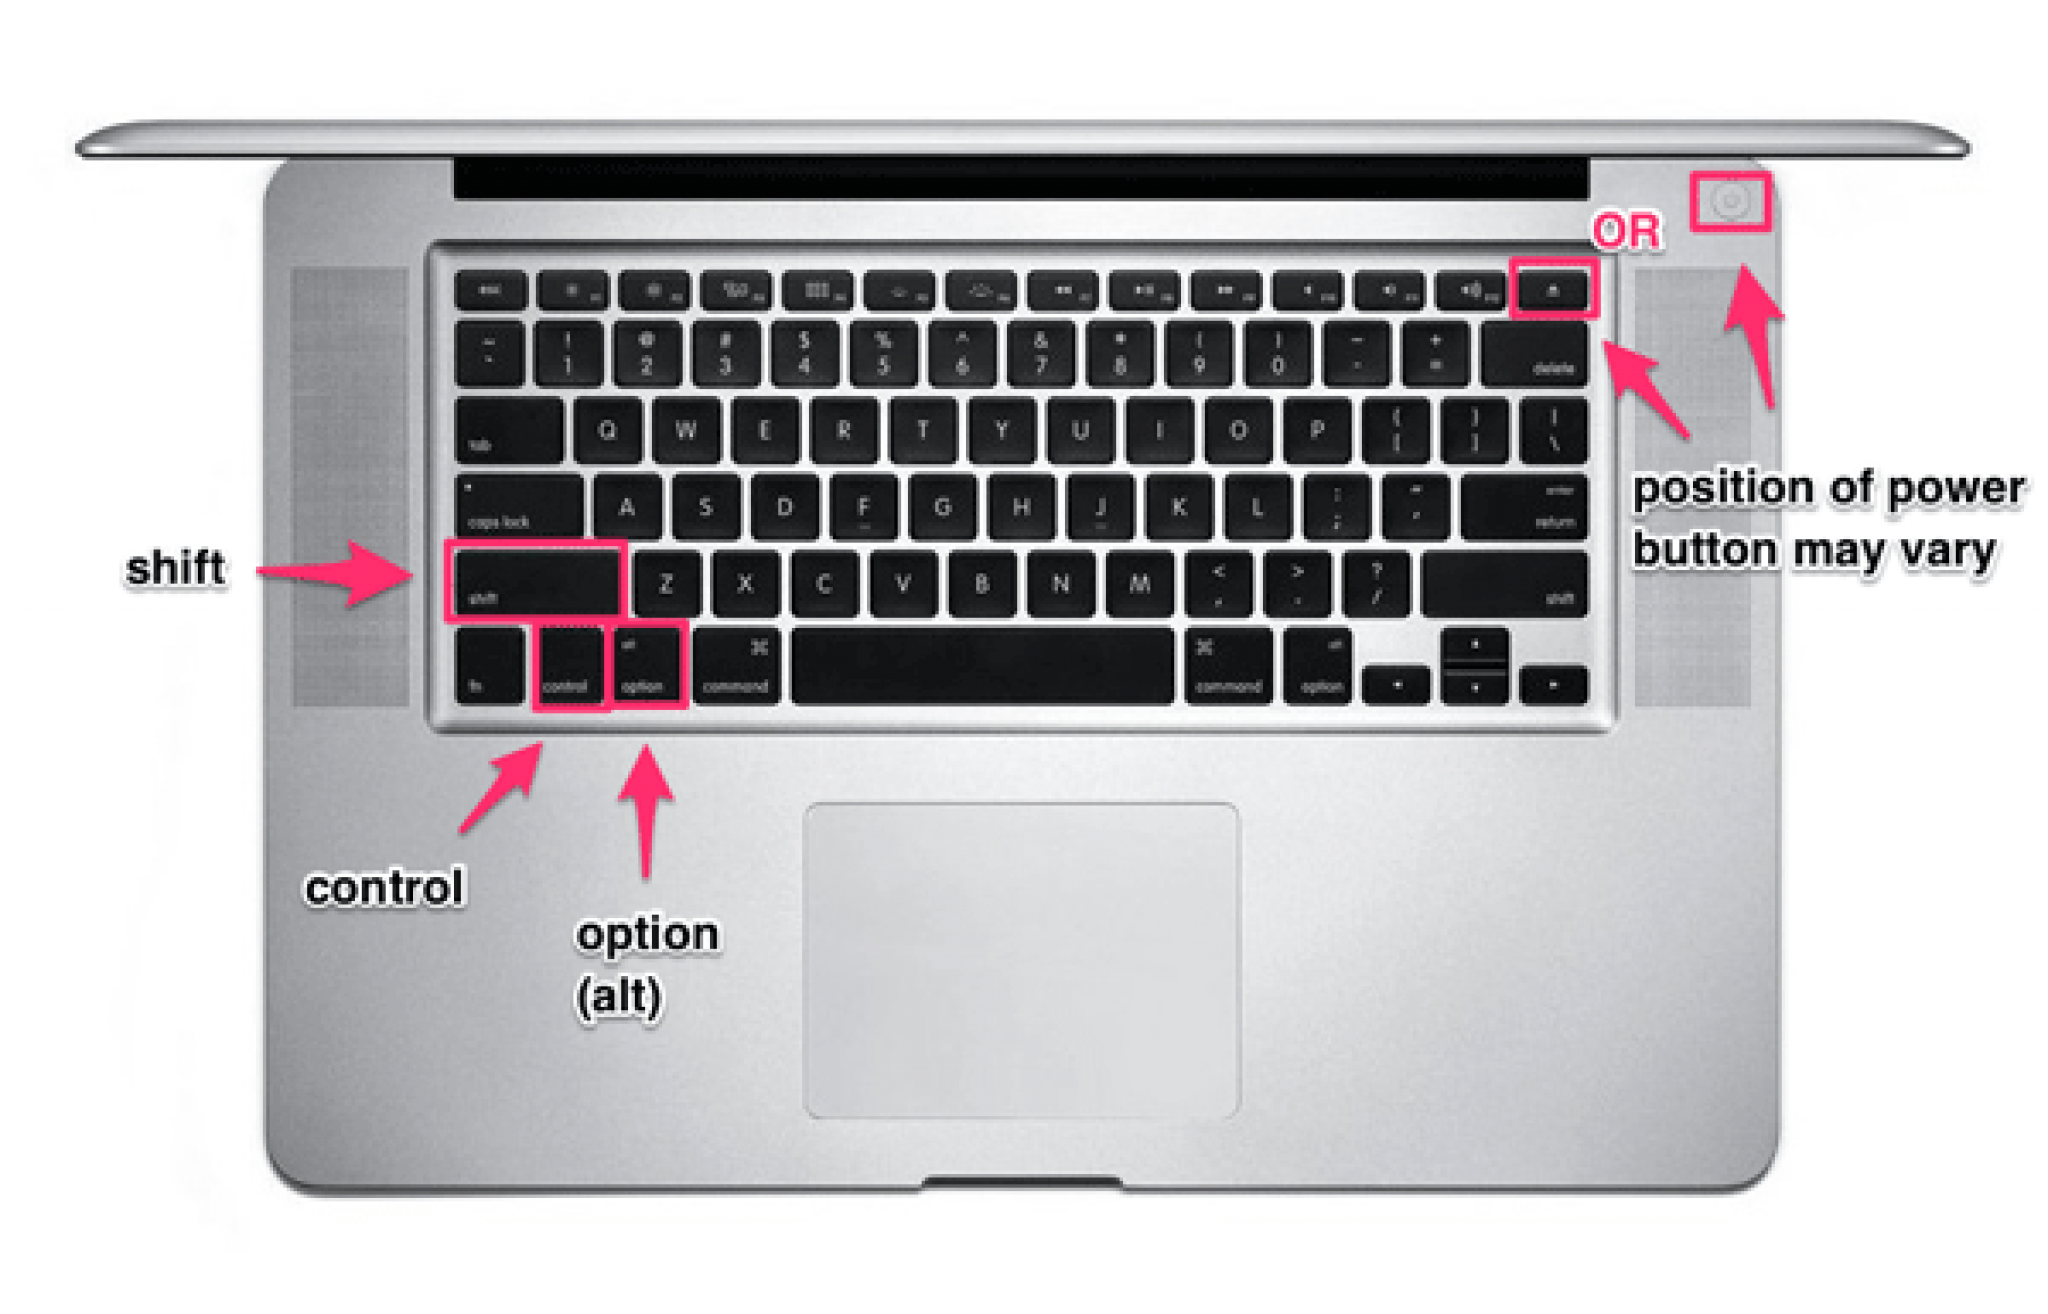 Control shift. Сброс SMC MACBOOK Pro. Shift-Control-option на Mac. Кнопка option на MACBOOK Air. Макбук Shift" + "Control" + "option".